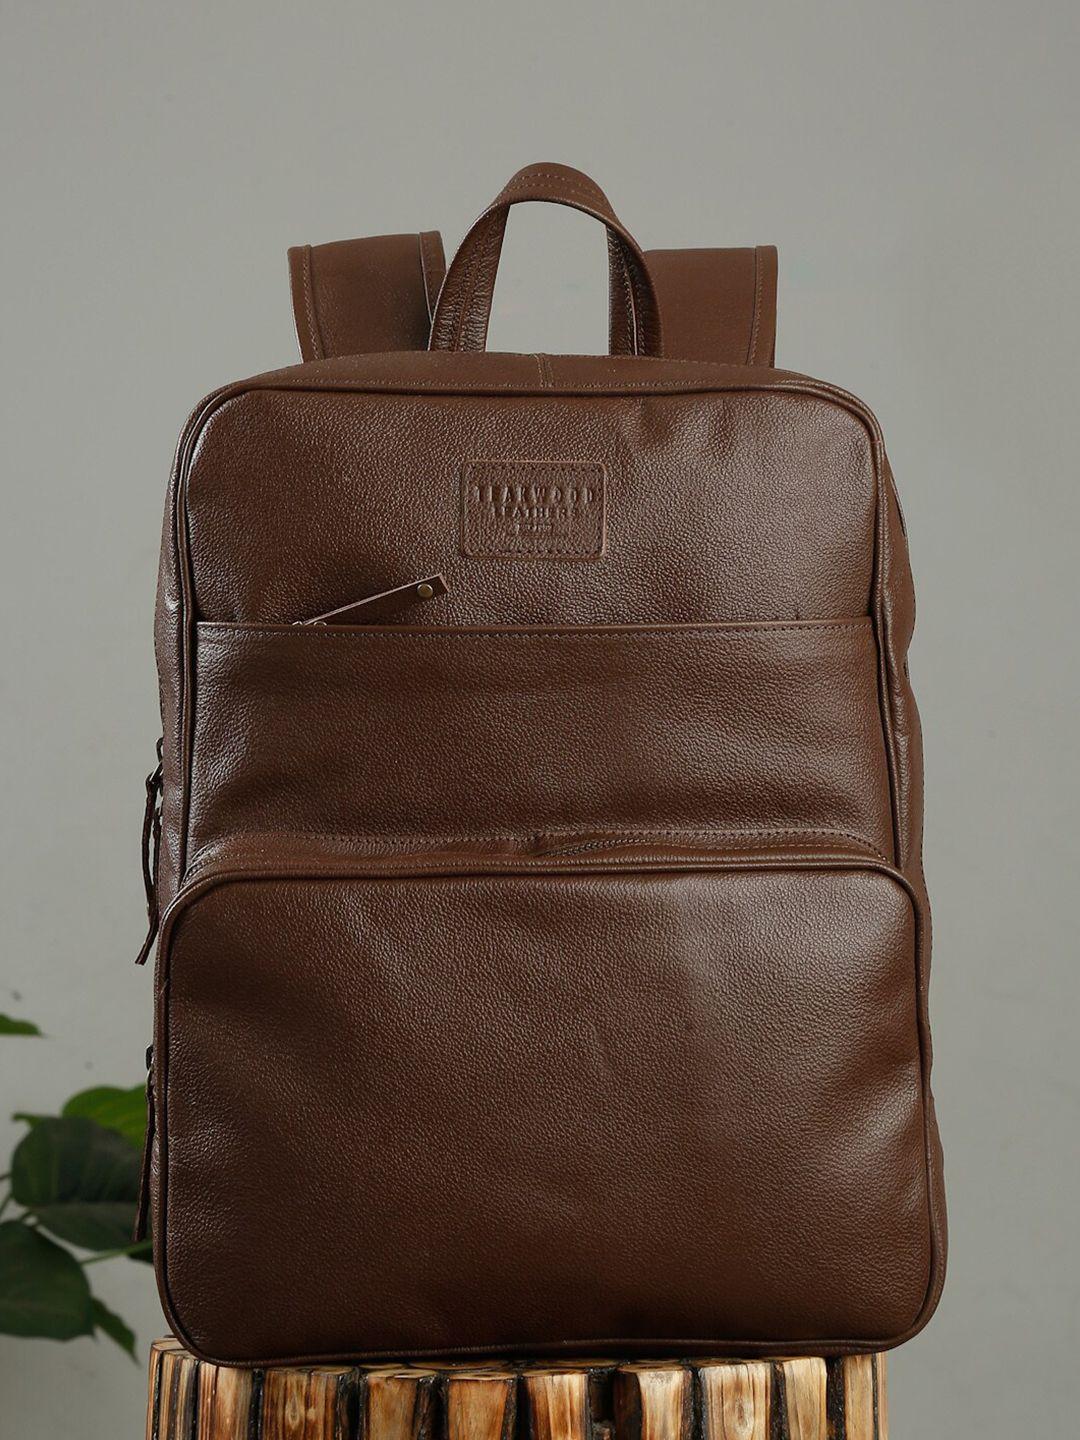 teakwood leathers men leather ergonomic backpack with anti-theft